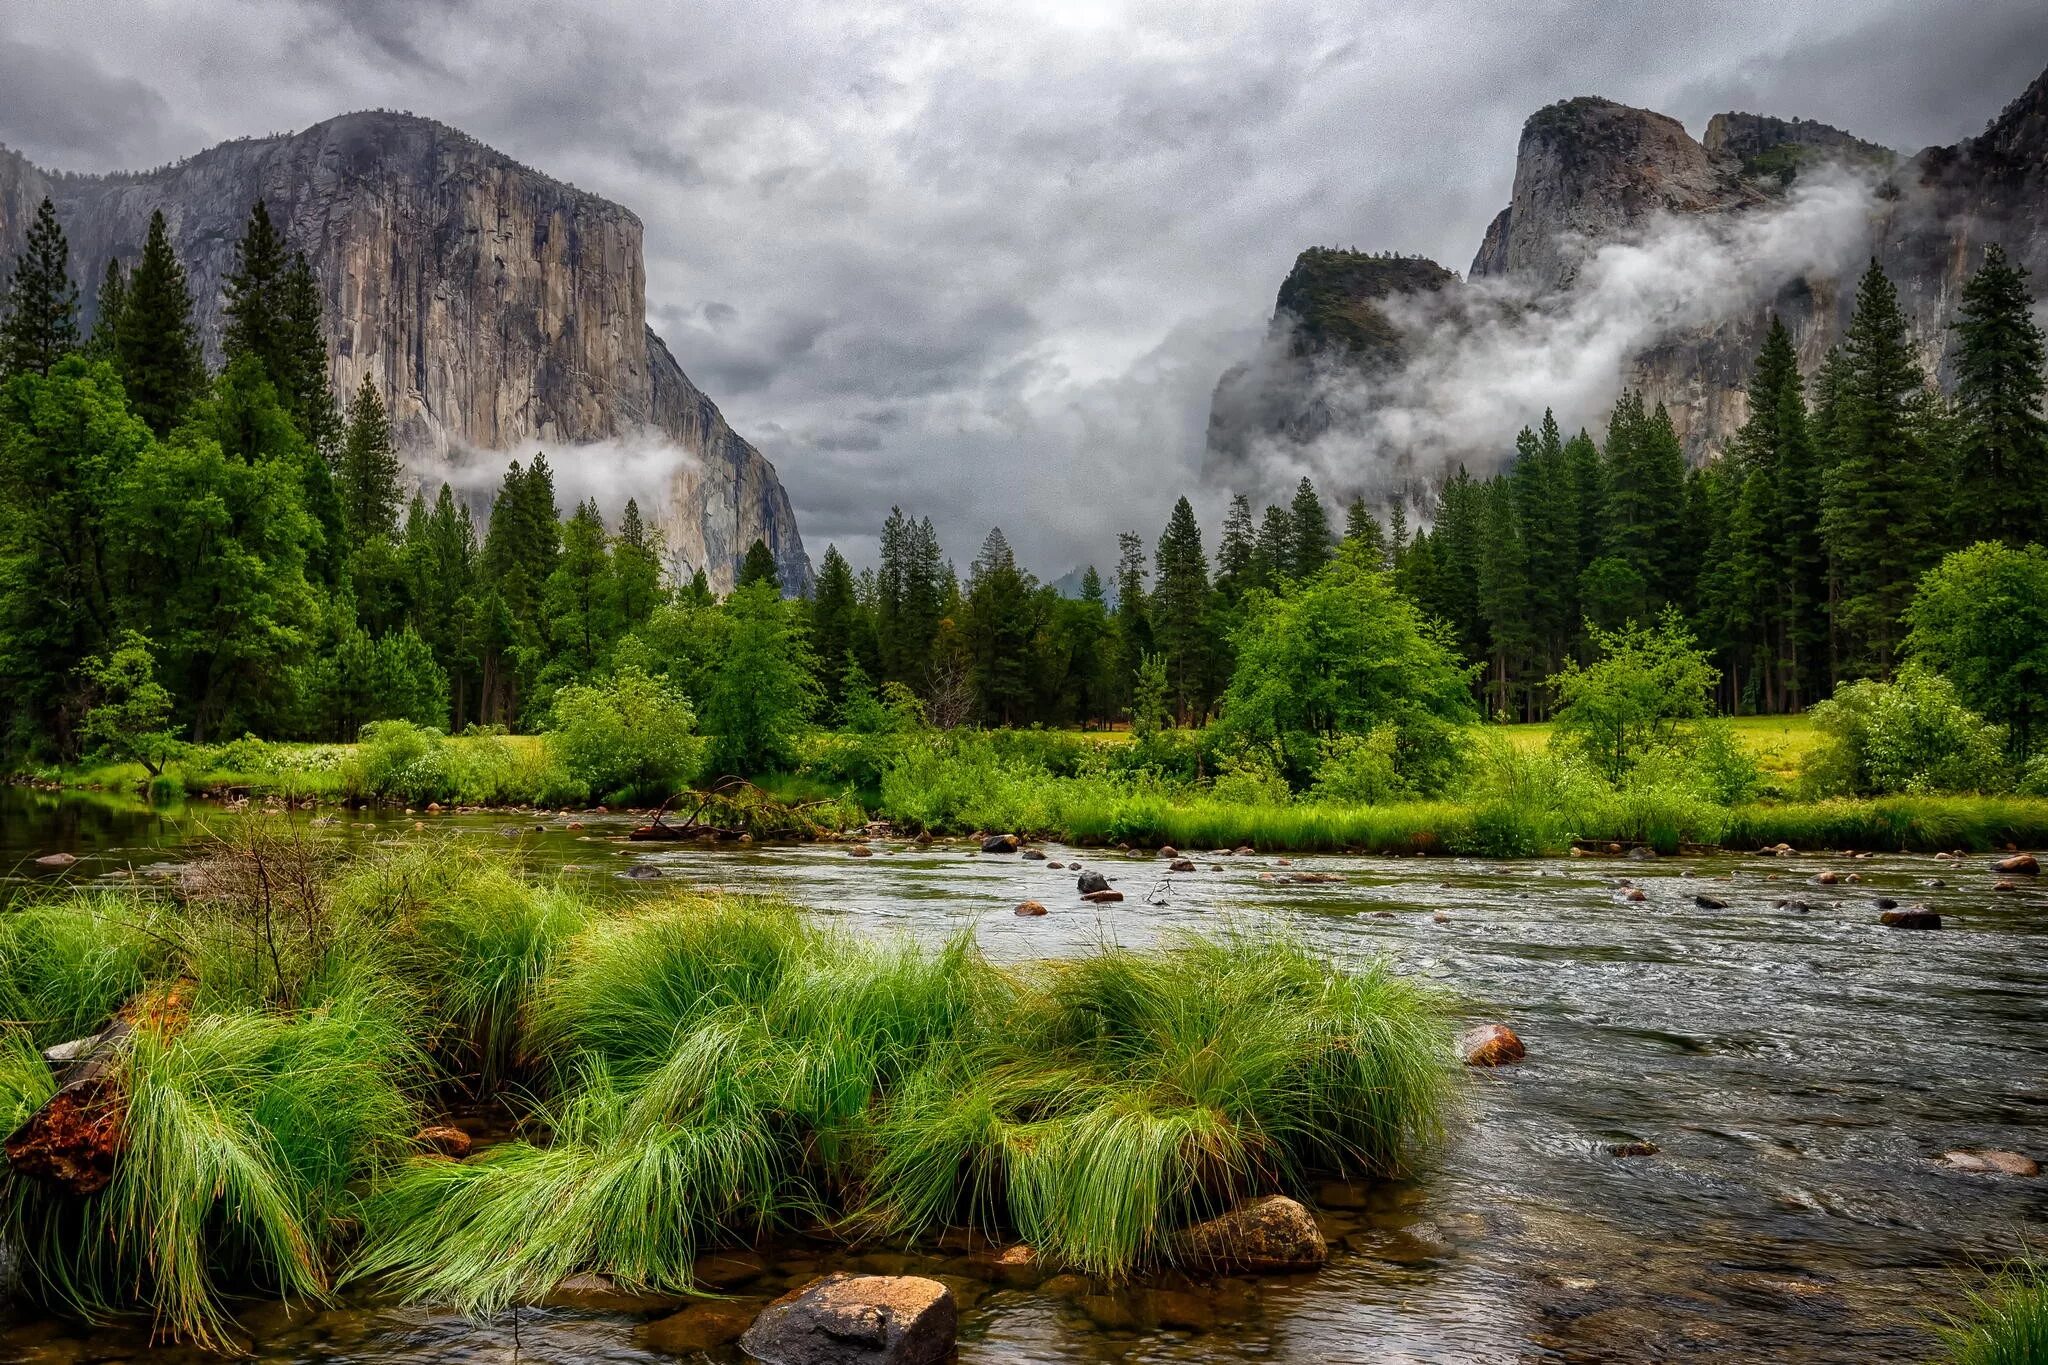 Какие красивые пейзажи. Река Мерсед, Йосемити, США.. Река, горы, лес, River, Mountains, Forest. Лес Йосемити. Красивый пейзаж.